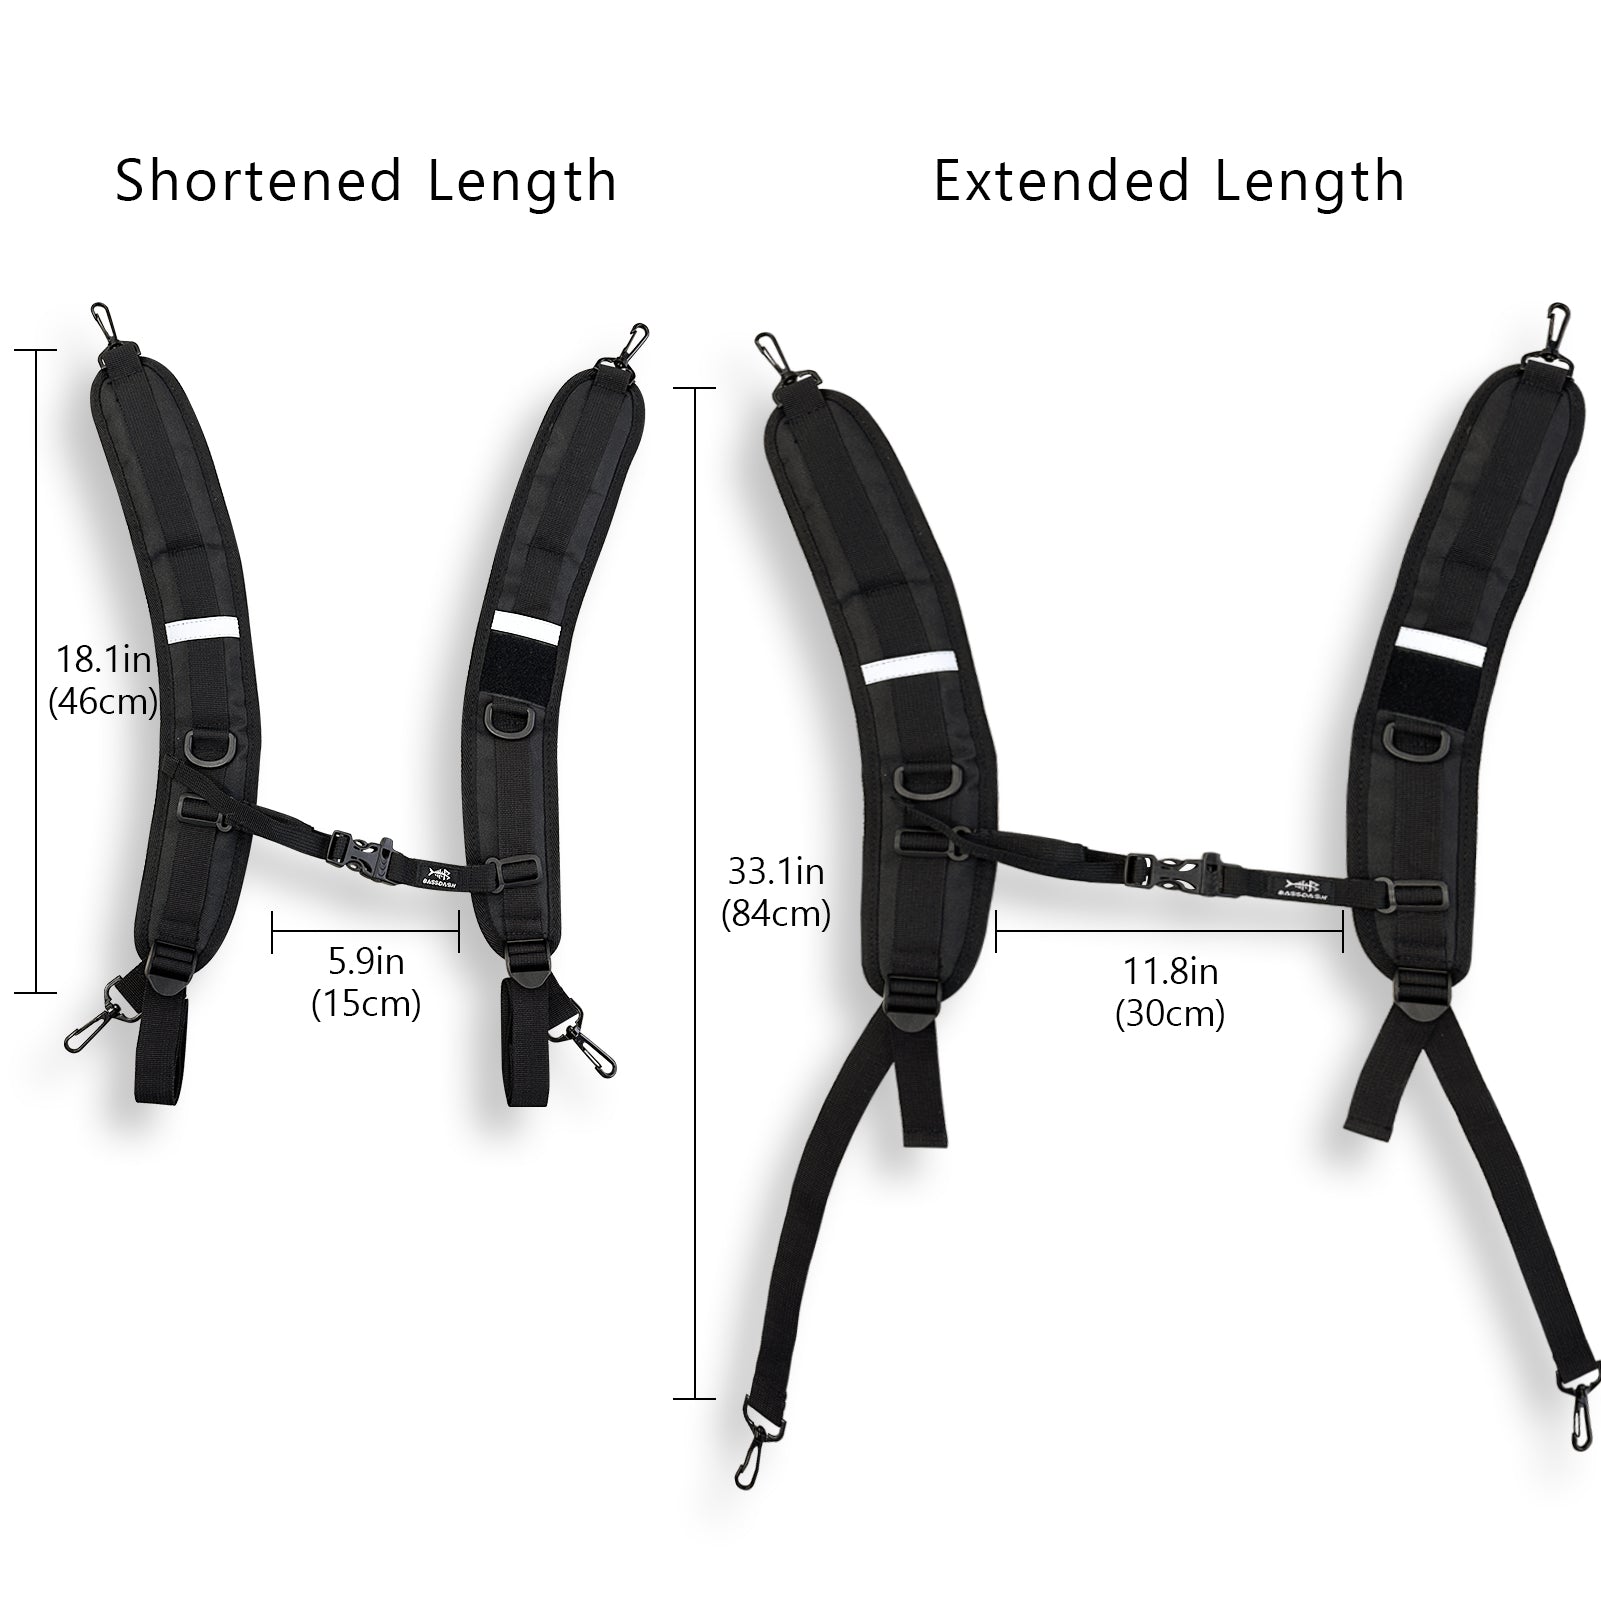 Shoulder Straps - set of two straps (plastic clips)